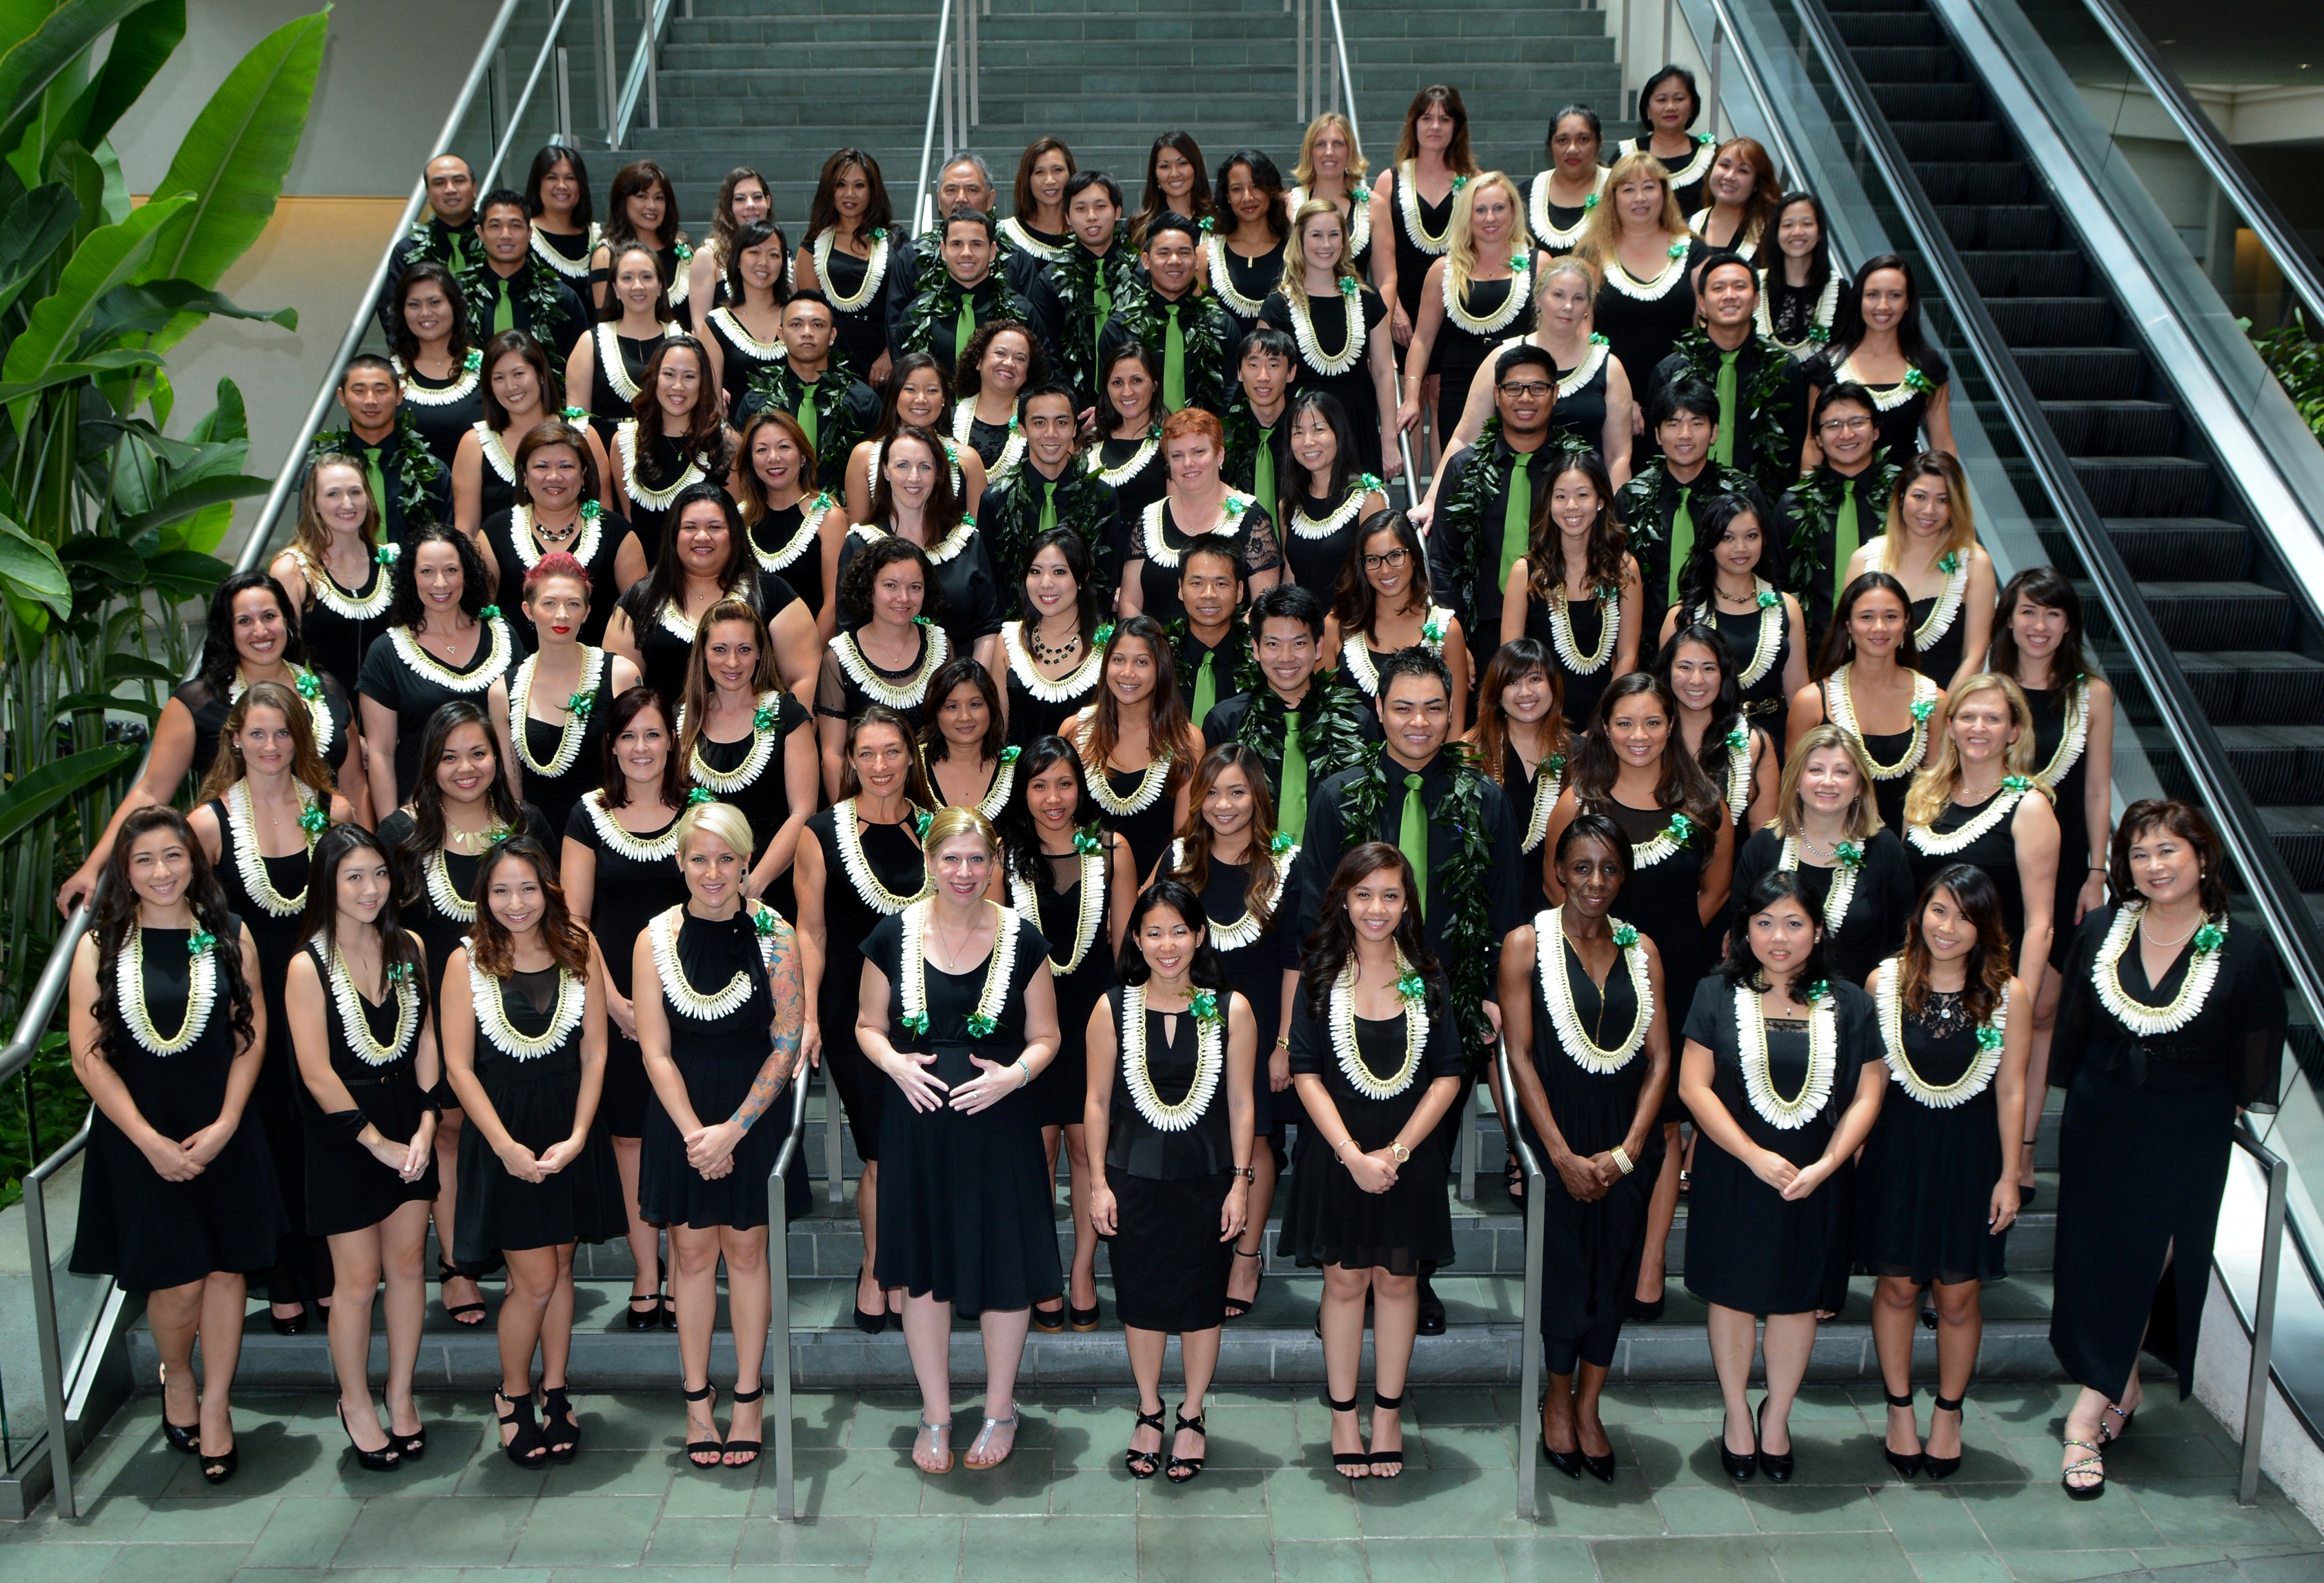  UHM Nursing Spring 2014 graduates